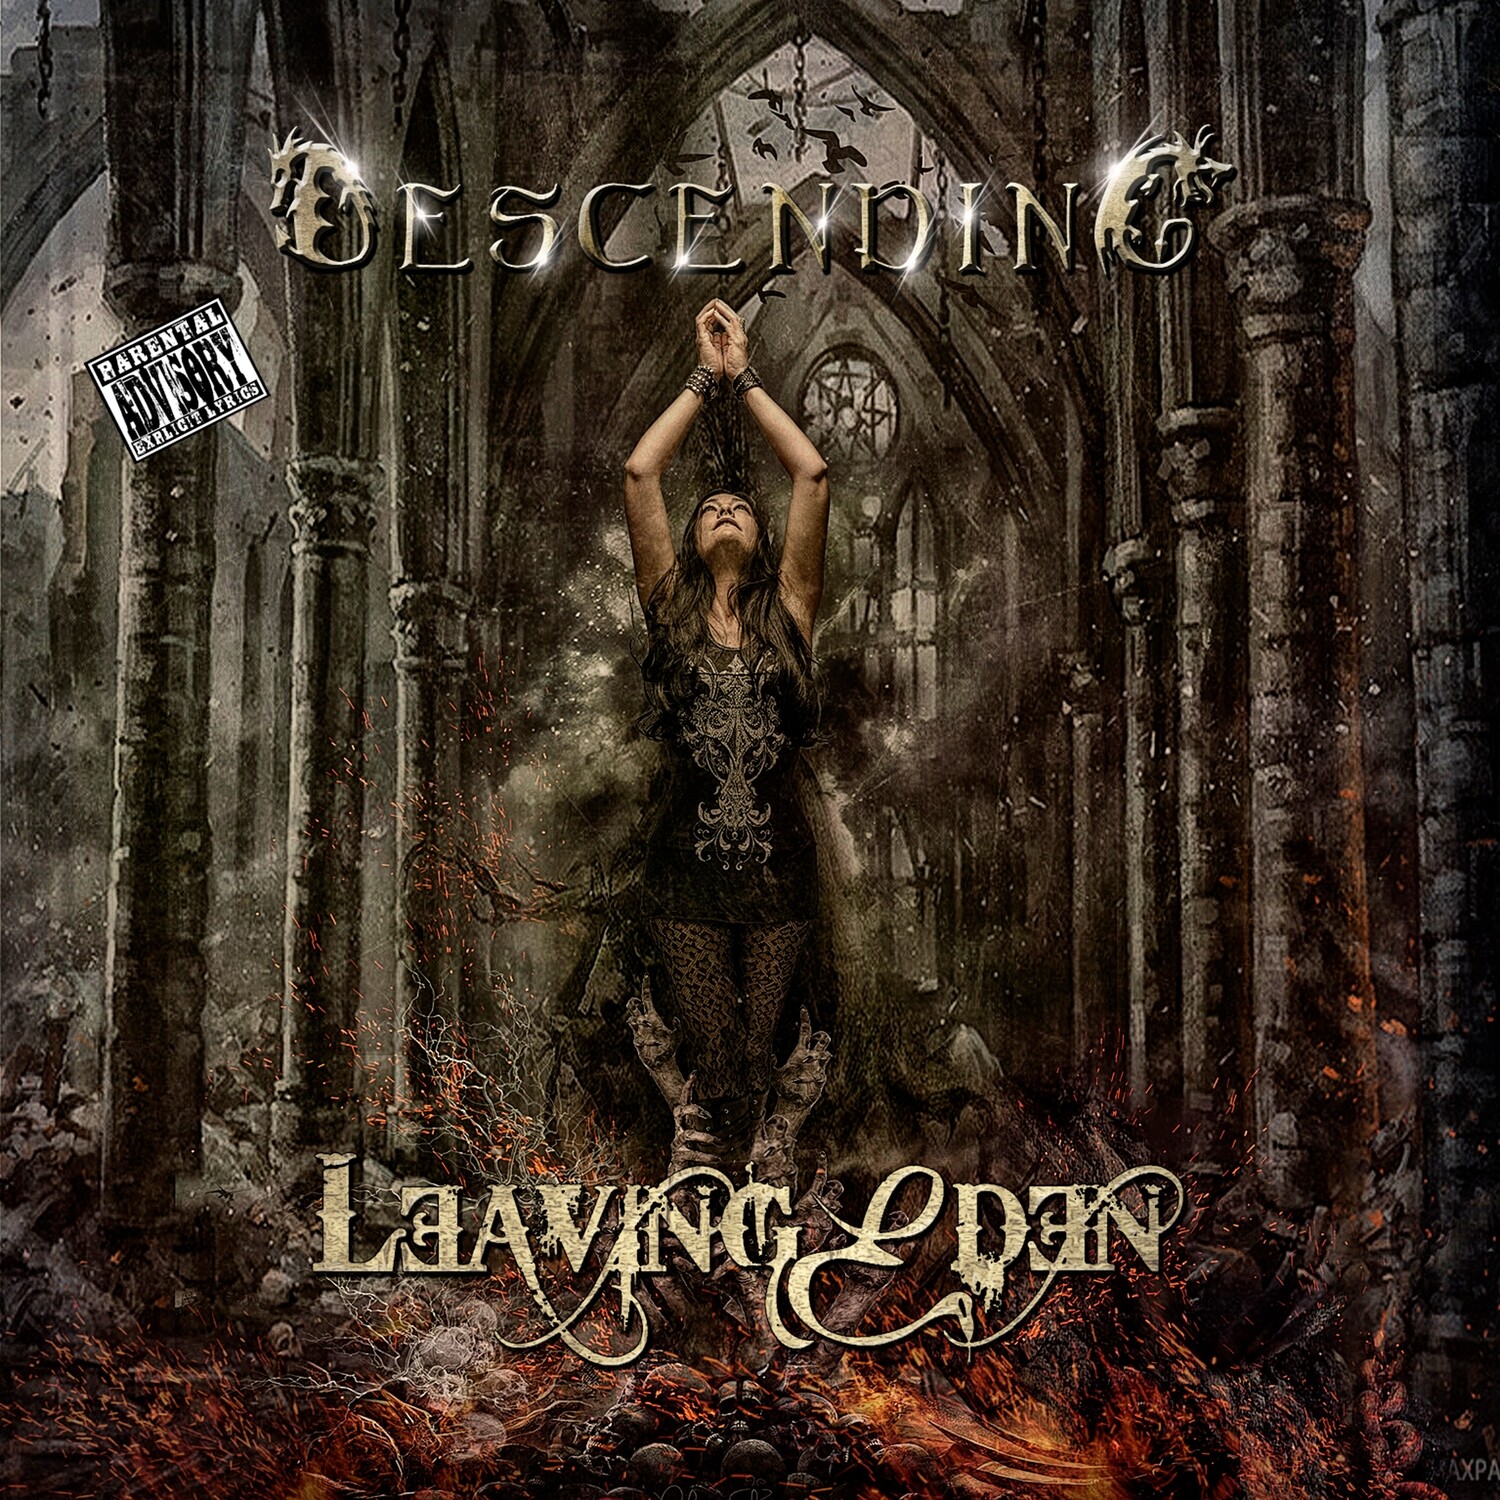 Descending by Leaving Eden [CD]